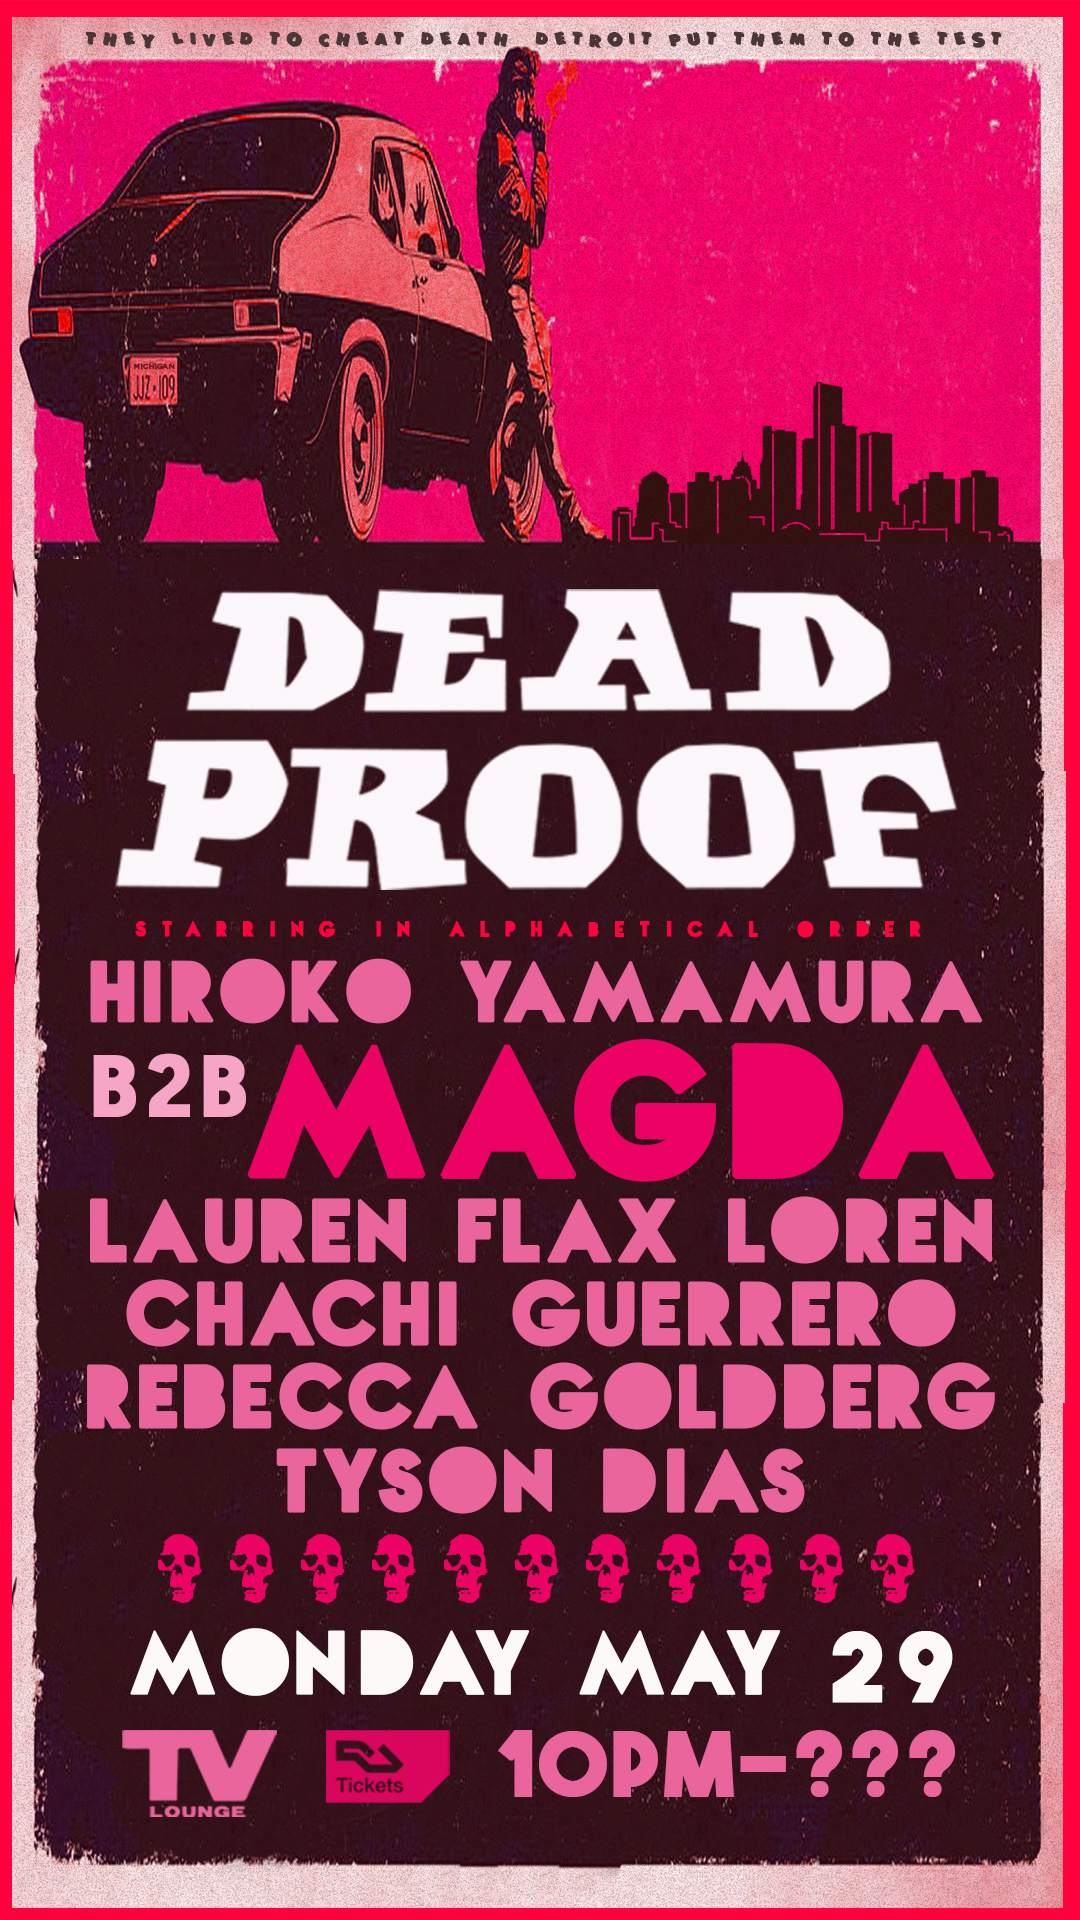 Dead Proof: wsg Magda at TV Lounge, Detroit